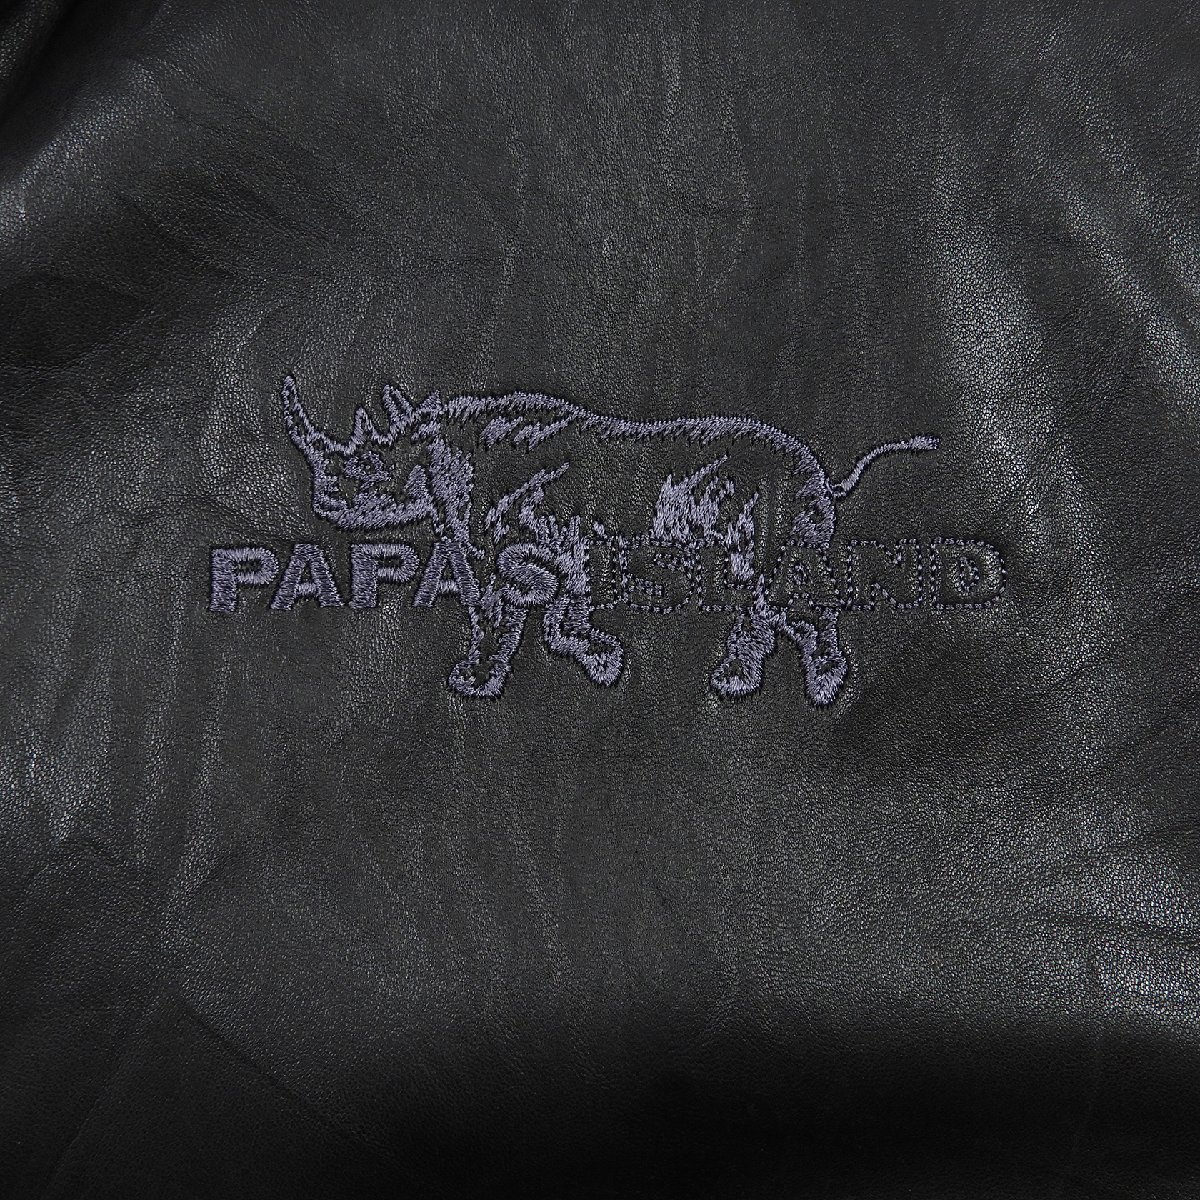 Papas パパス ラムレザー ダウンジャケット ブラック size M #10791 アメカジ 本革 羊革 PAPAS ISLAND_画像4